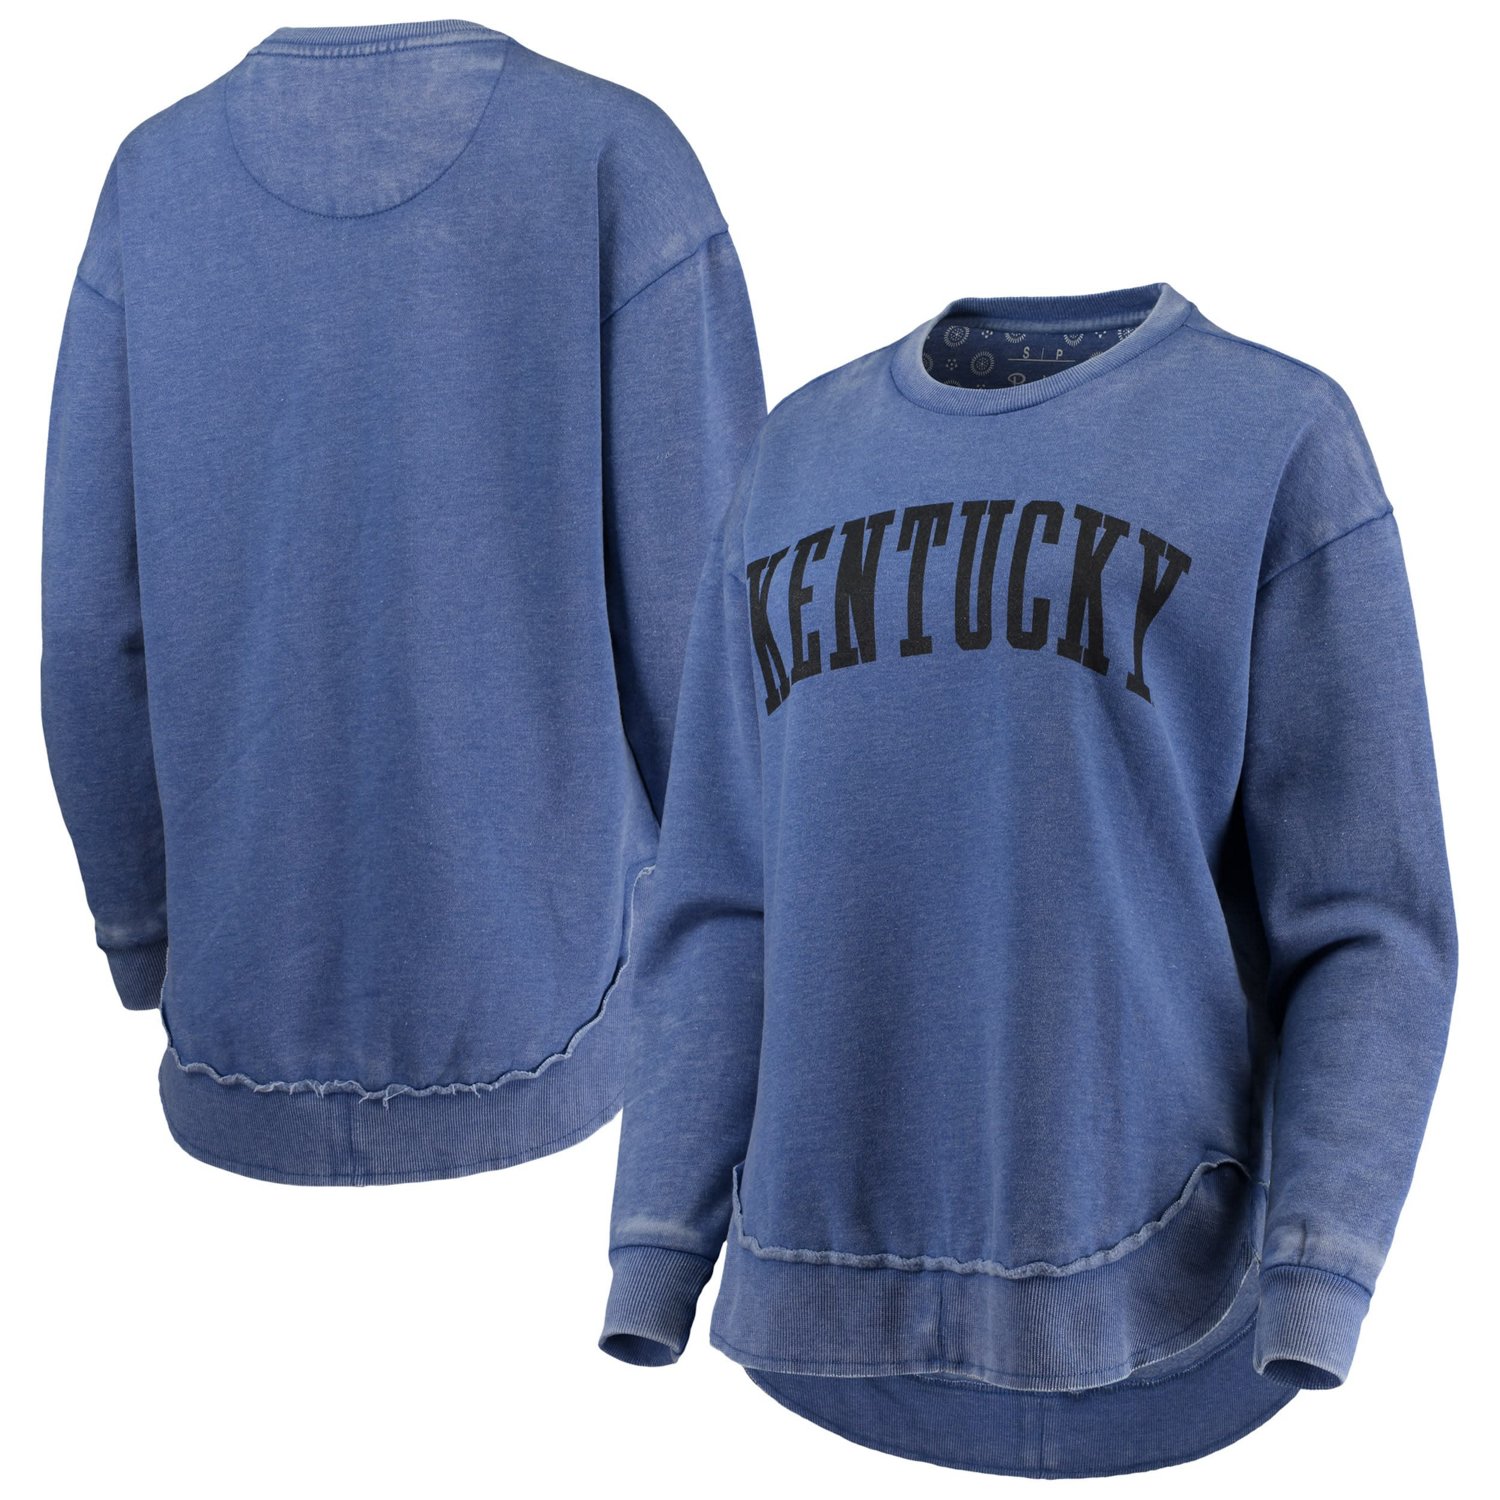 VintageWash Adult Crewneck Sweatshirt